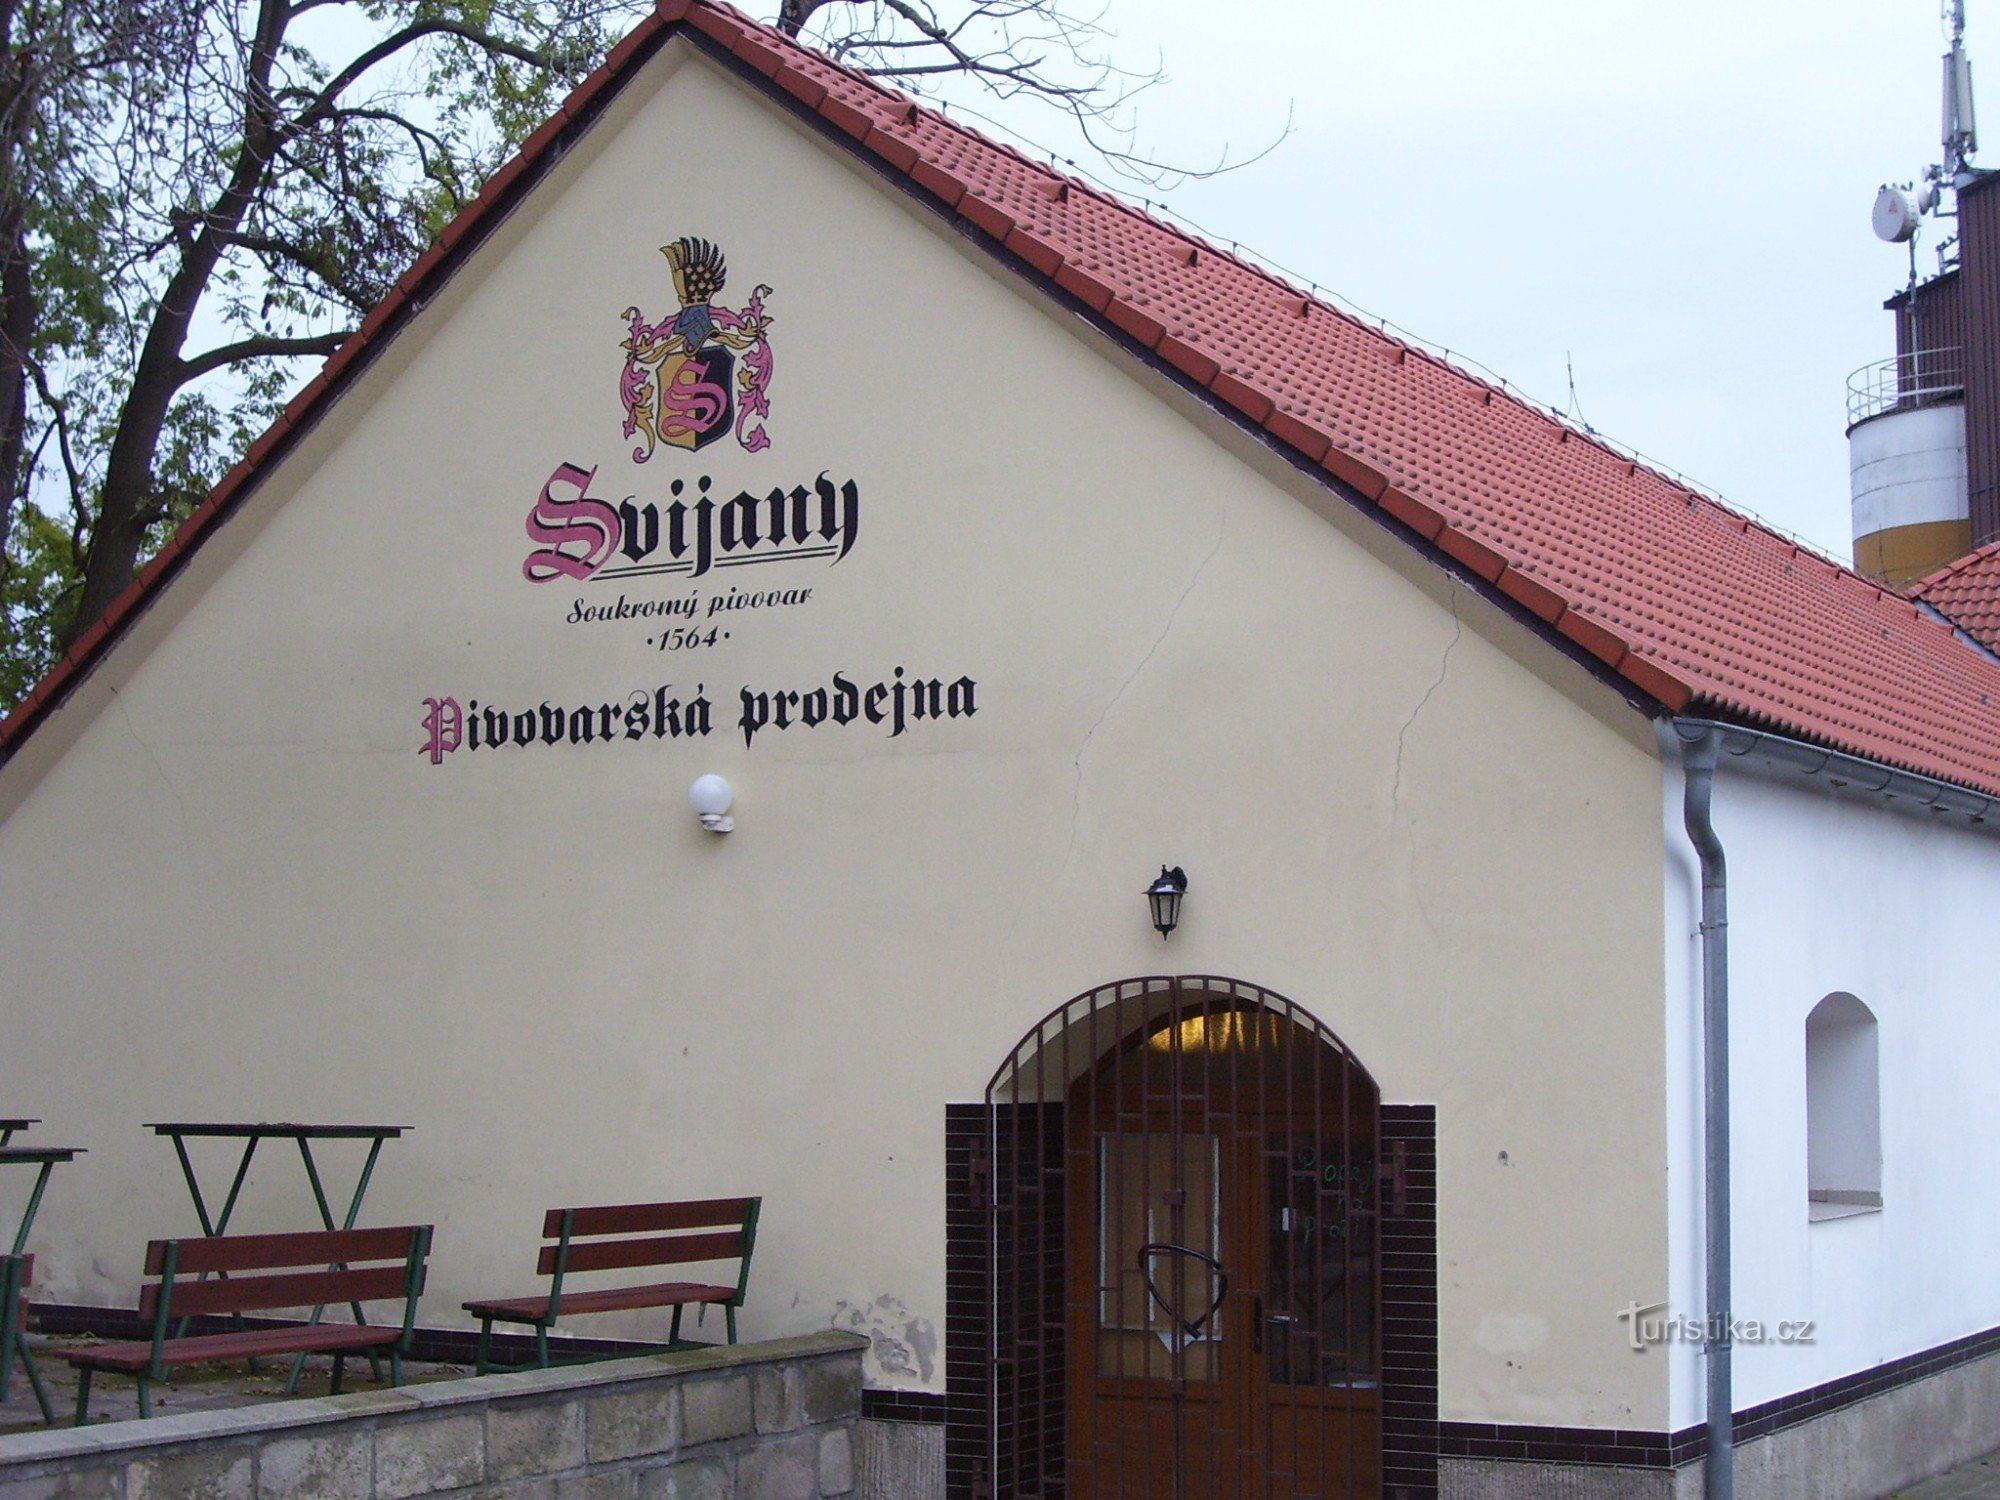 Svijany 啤酒厂